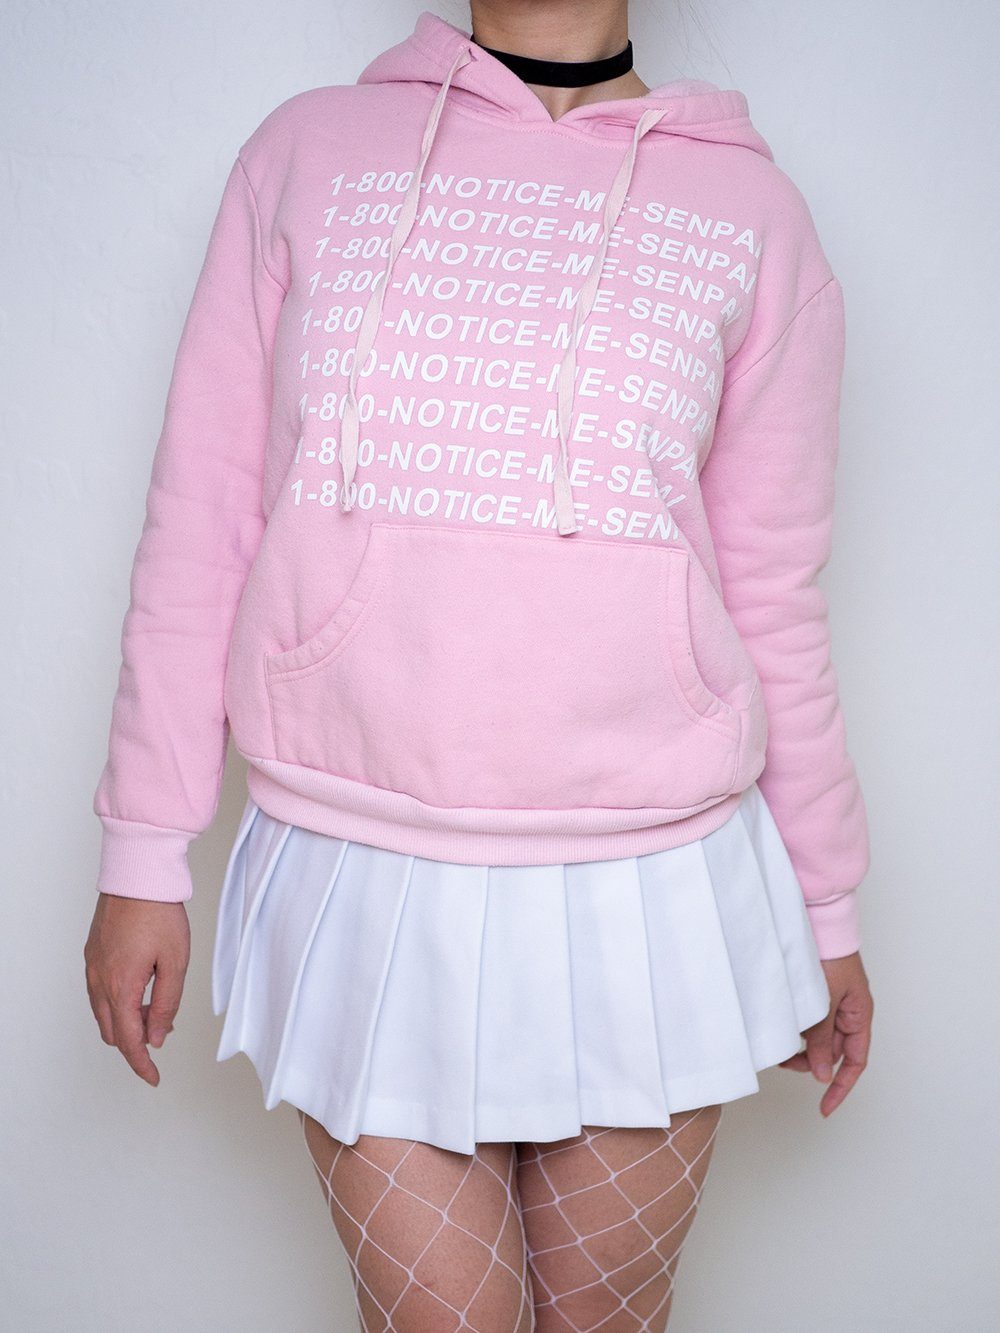 SALE 1 800 Senpai Notice Me Pink Hoodie Sweater MF00505 - SYNDROME - Cute Kawaii Harajuku Street Fashion Store